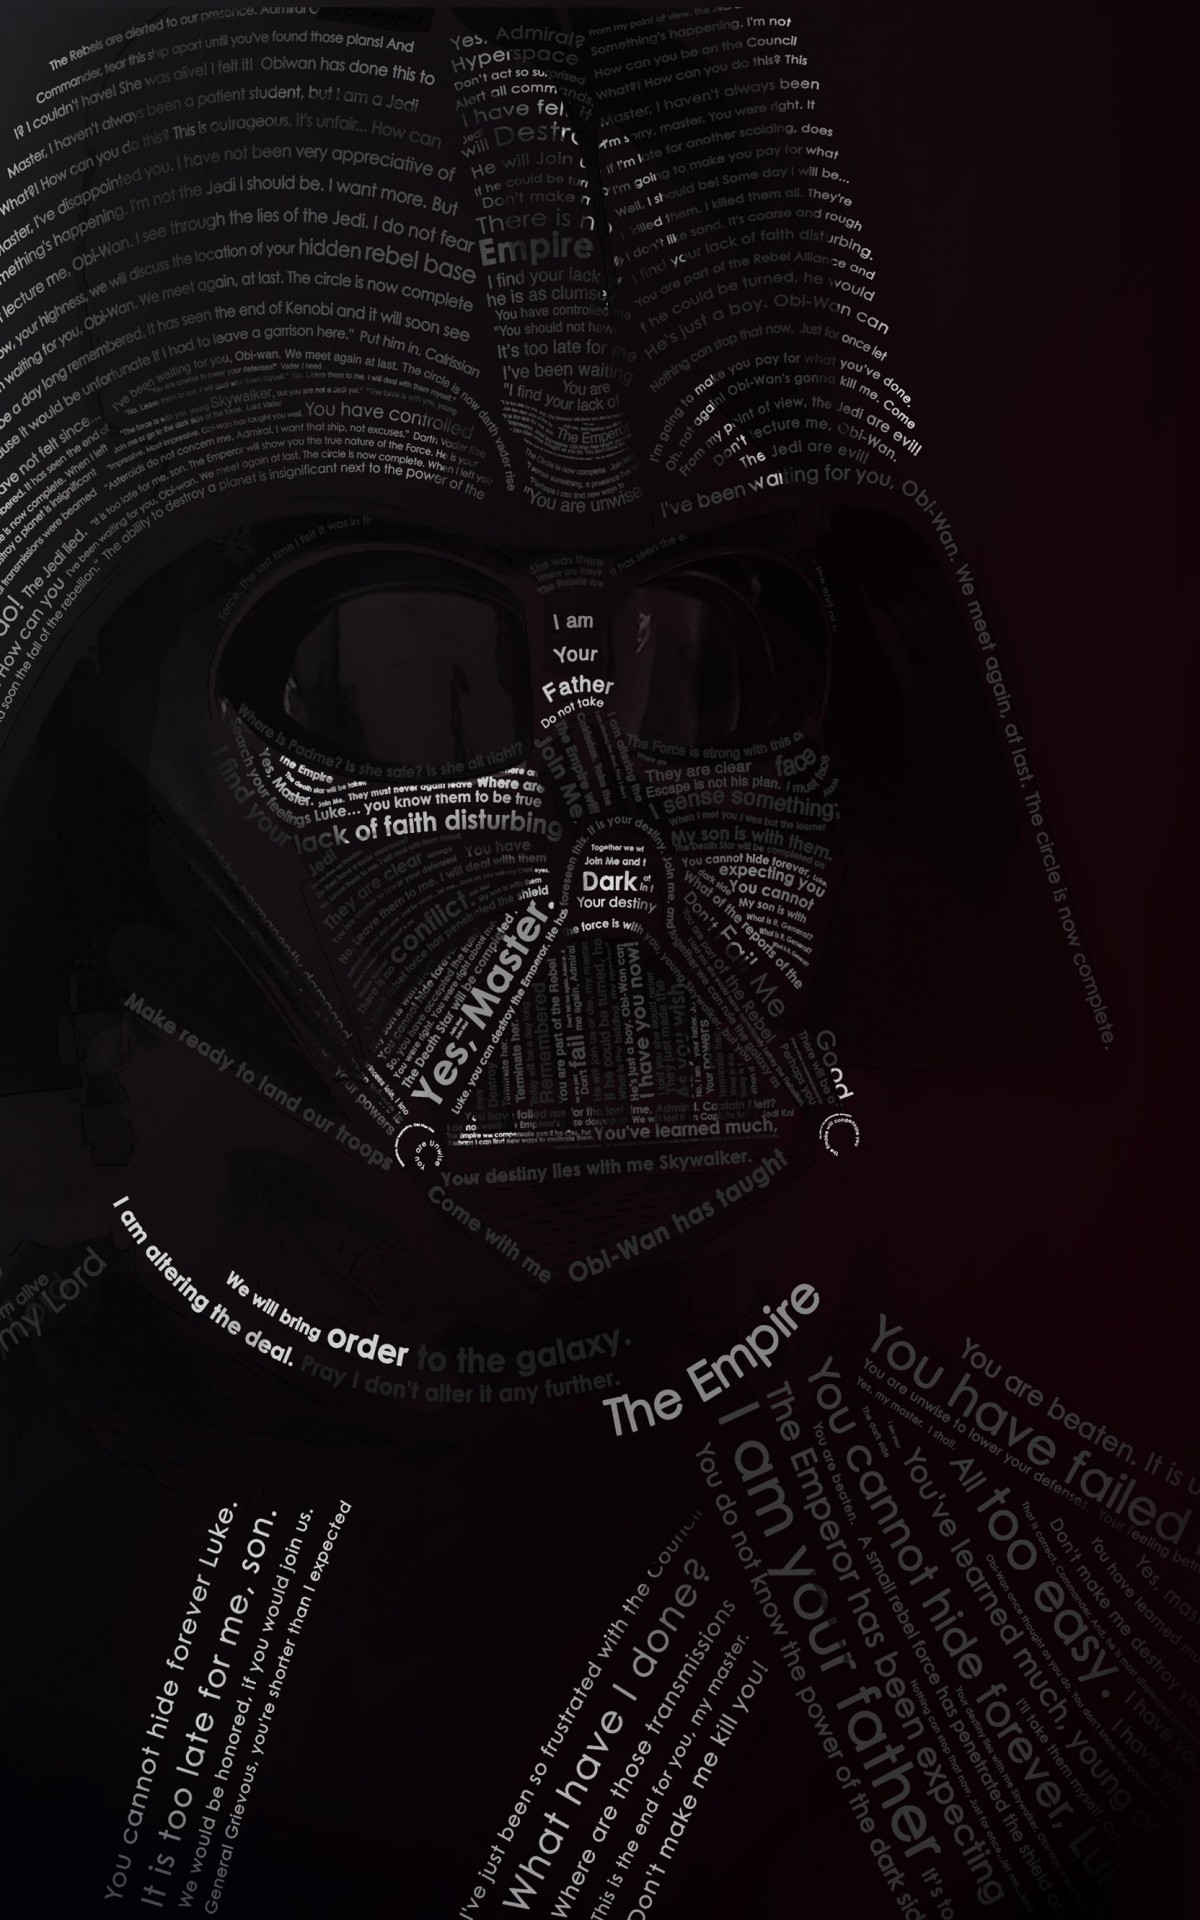 Darth Vader Typographic Portrait Wallpaper for Amazon Kindle Fire HDX